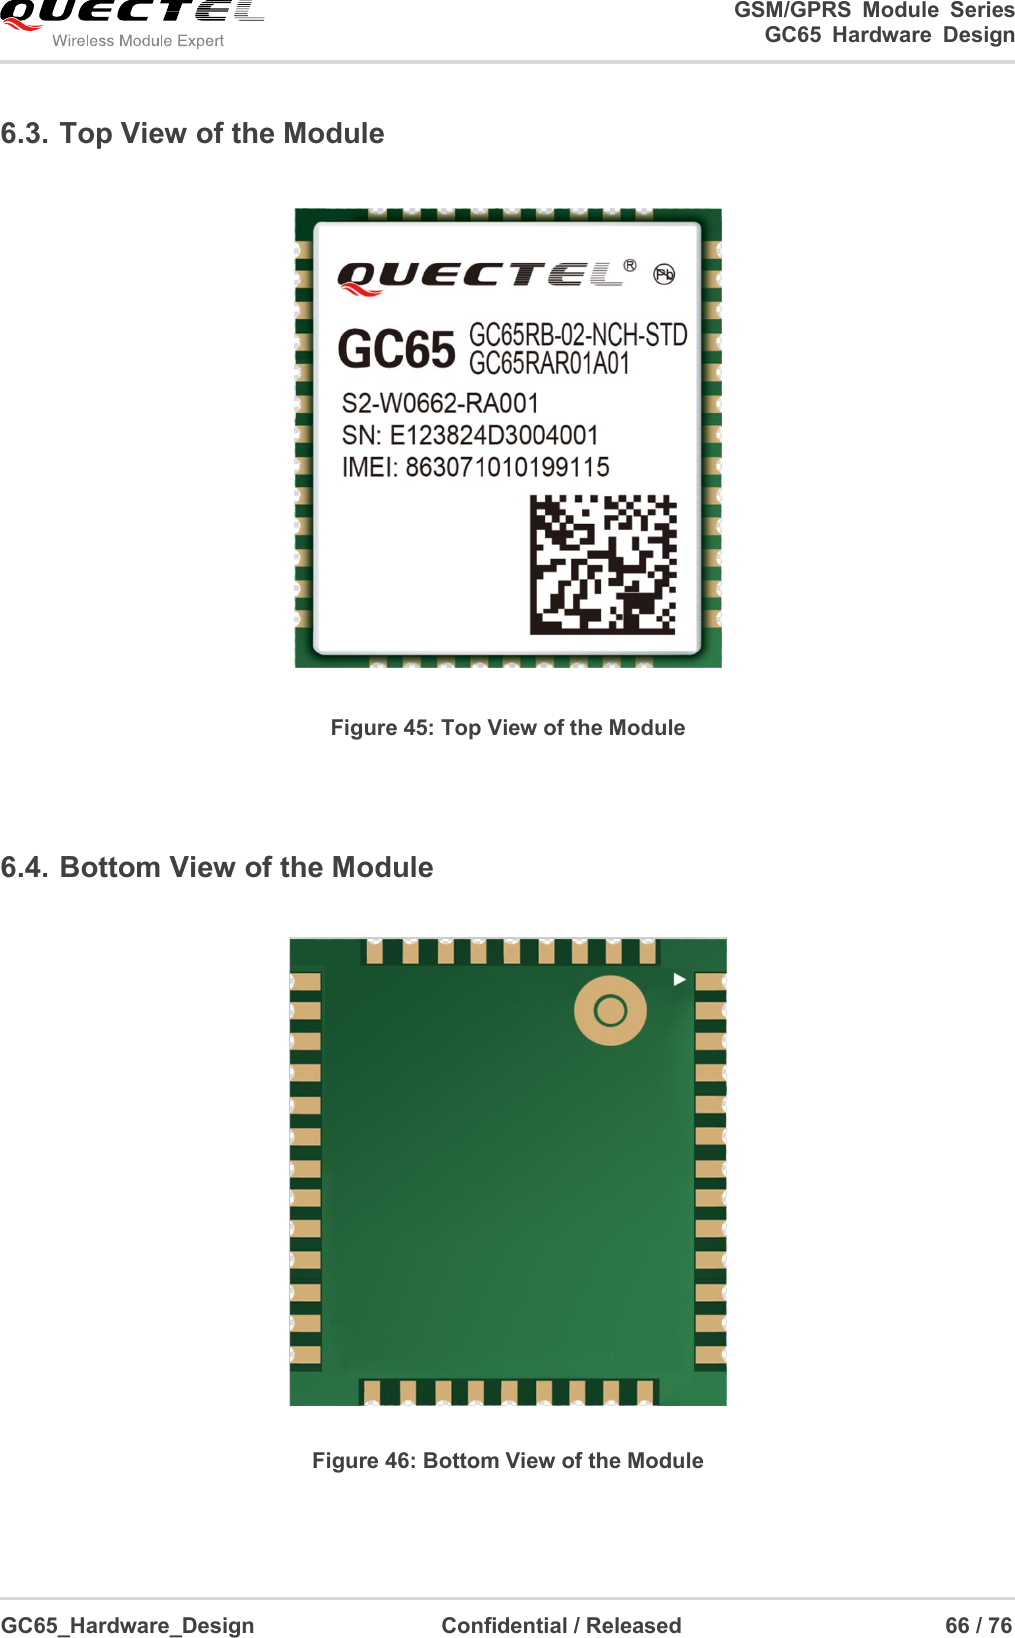                                                                          GSM/GPRS  Module  Series                                                                 GC65 Hardware Design  GC65_Hardware_Design                                  Confidential / Released                                                66 / 76      6.3. Top View of the Module  Figure 45: Top View of the Module  6.4. Bottom View of the Module  Figure 46: Bottom View of the Module 